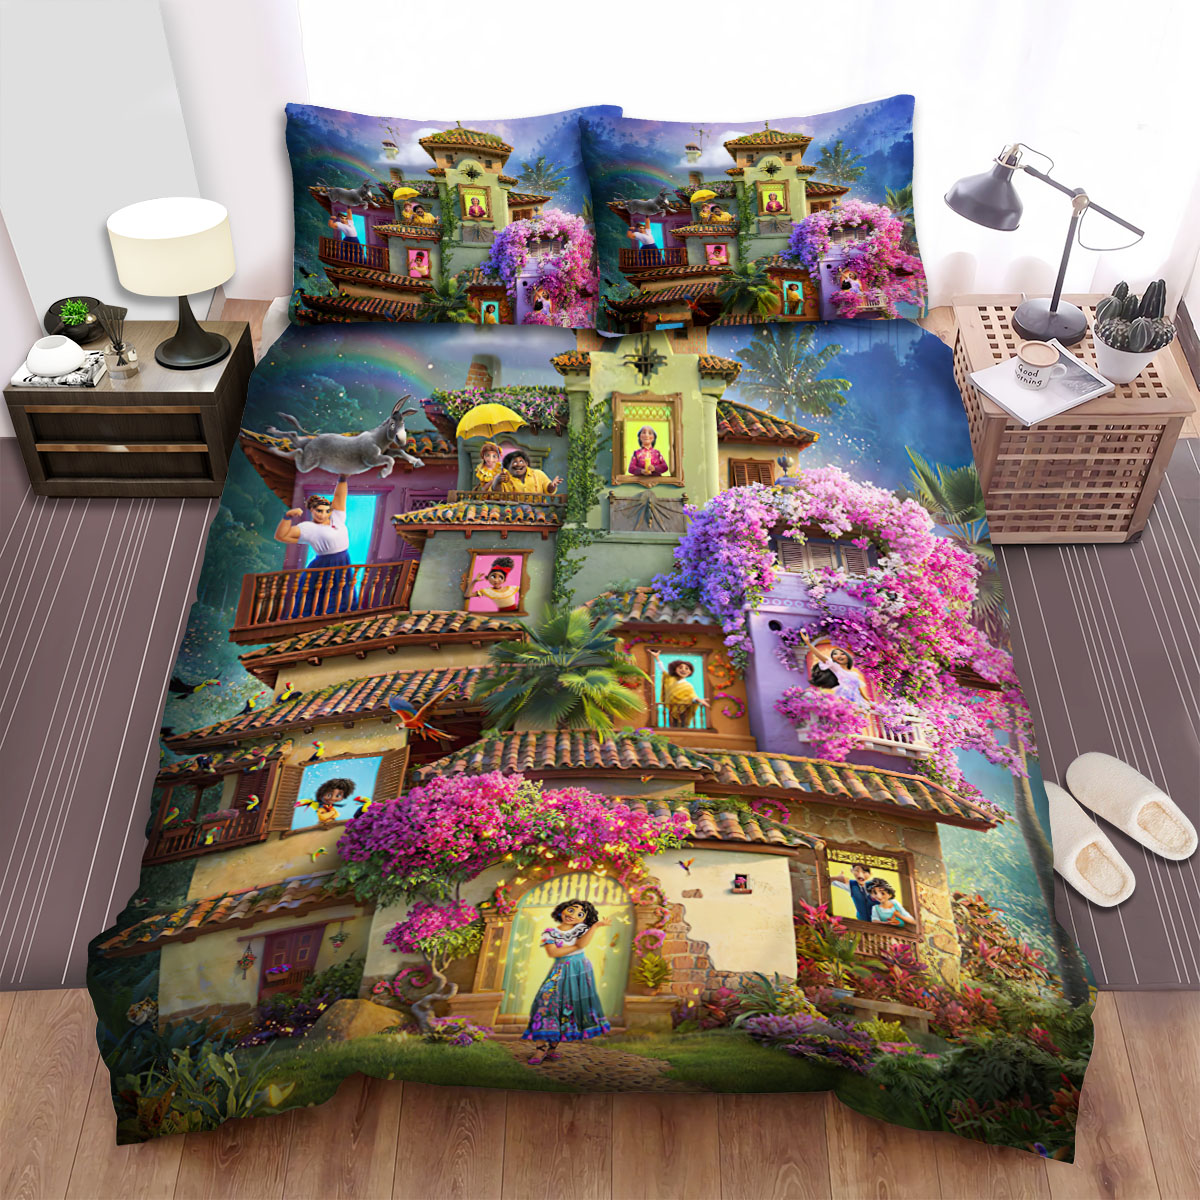 Encanto Bedding Set DN Encanto House Full Of Flowers Duvet Covers Colorful Unique Gift